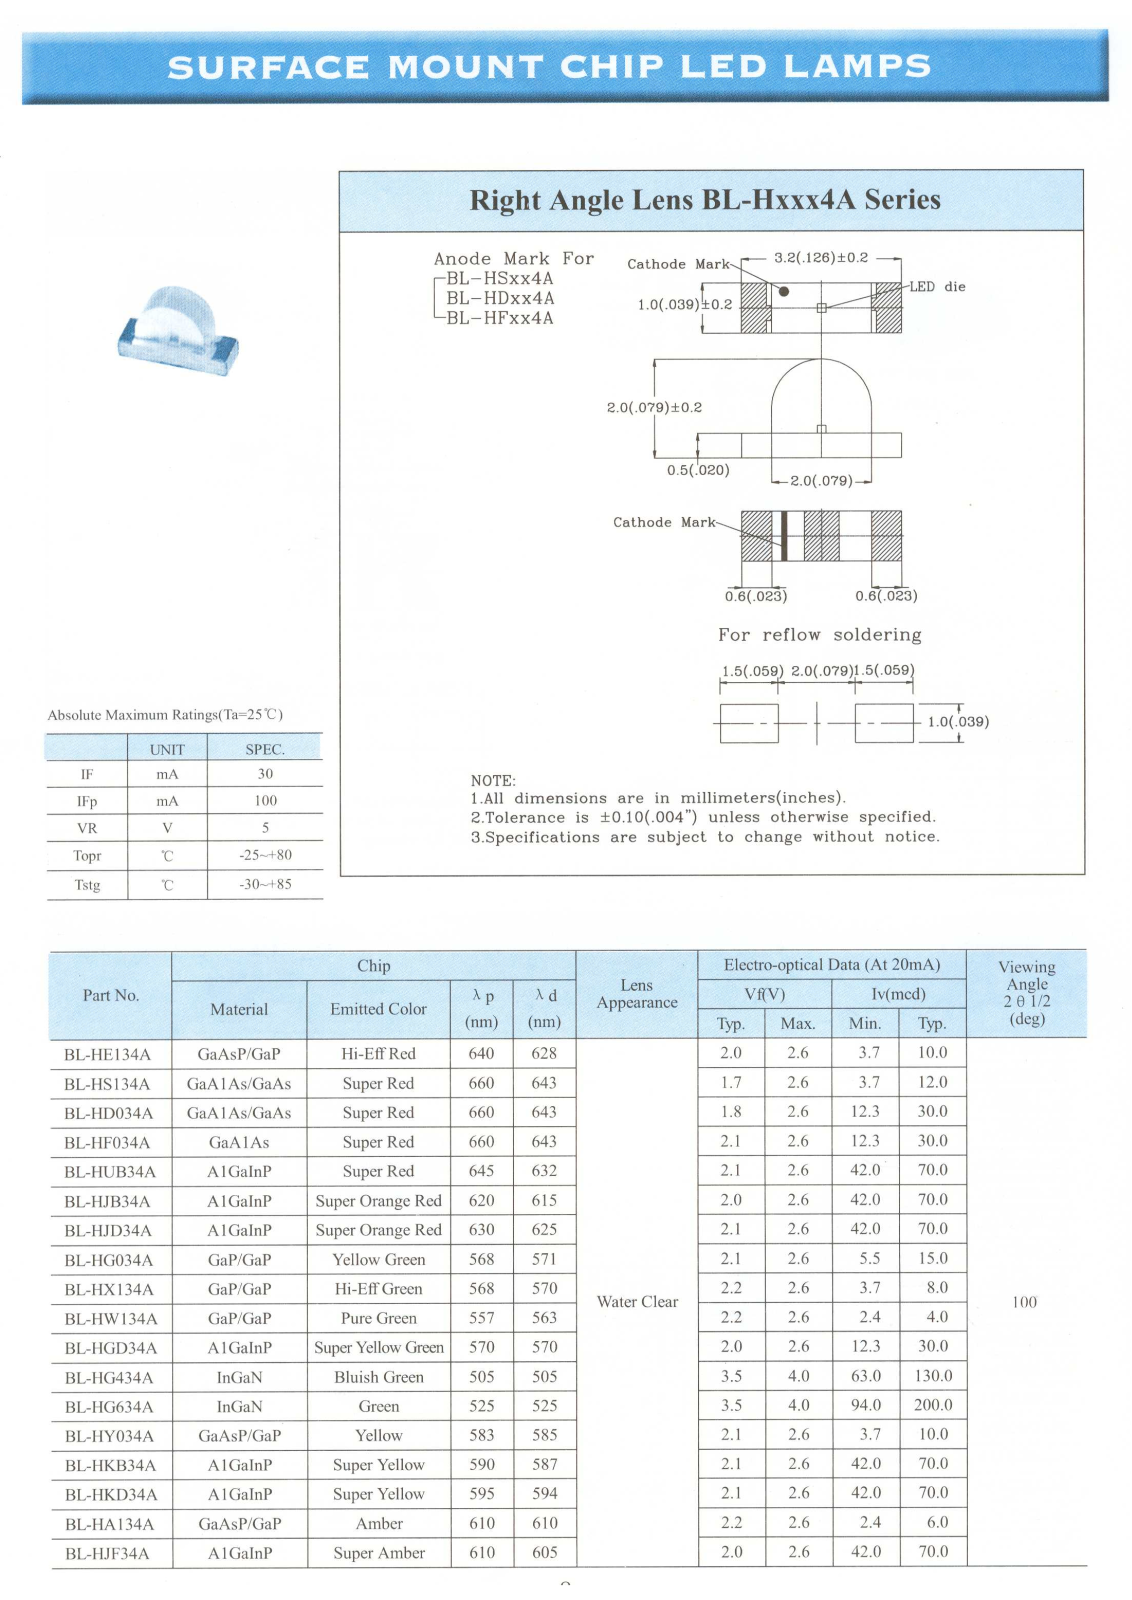 YELLOW STONE CORP BL-HY034A, BL-HX134A, BL-HW134A, BL-HUB34A, BL-HKB34A Datasheet